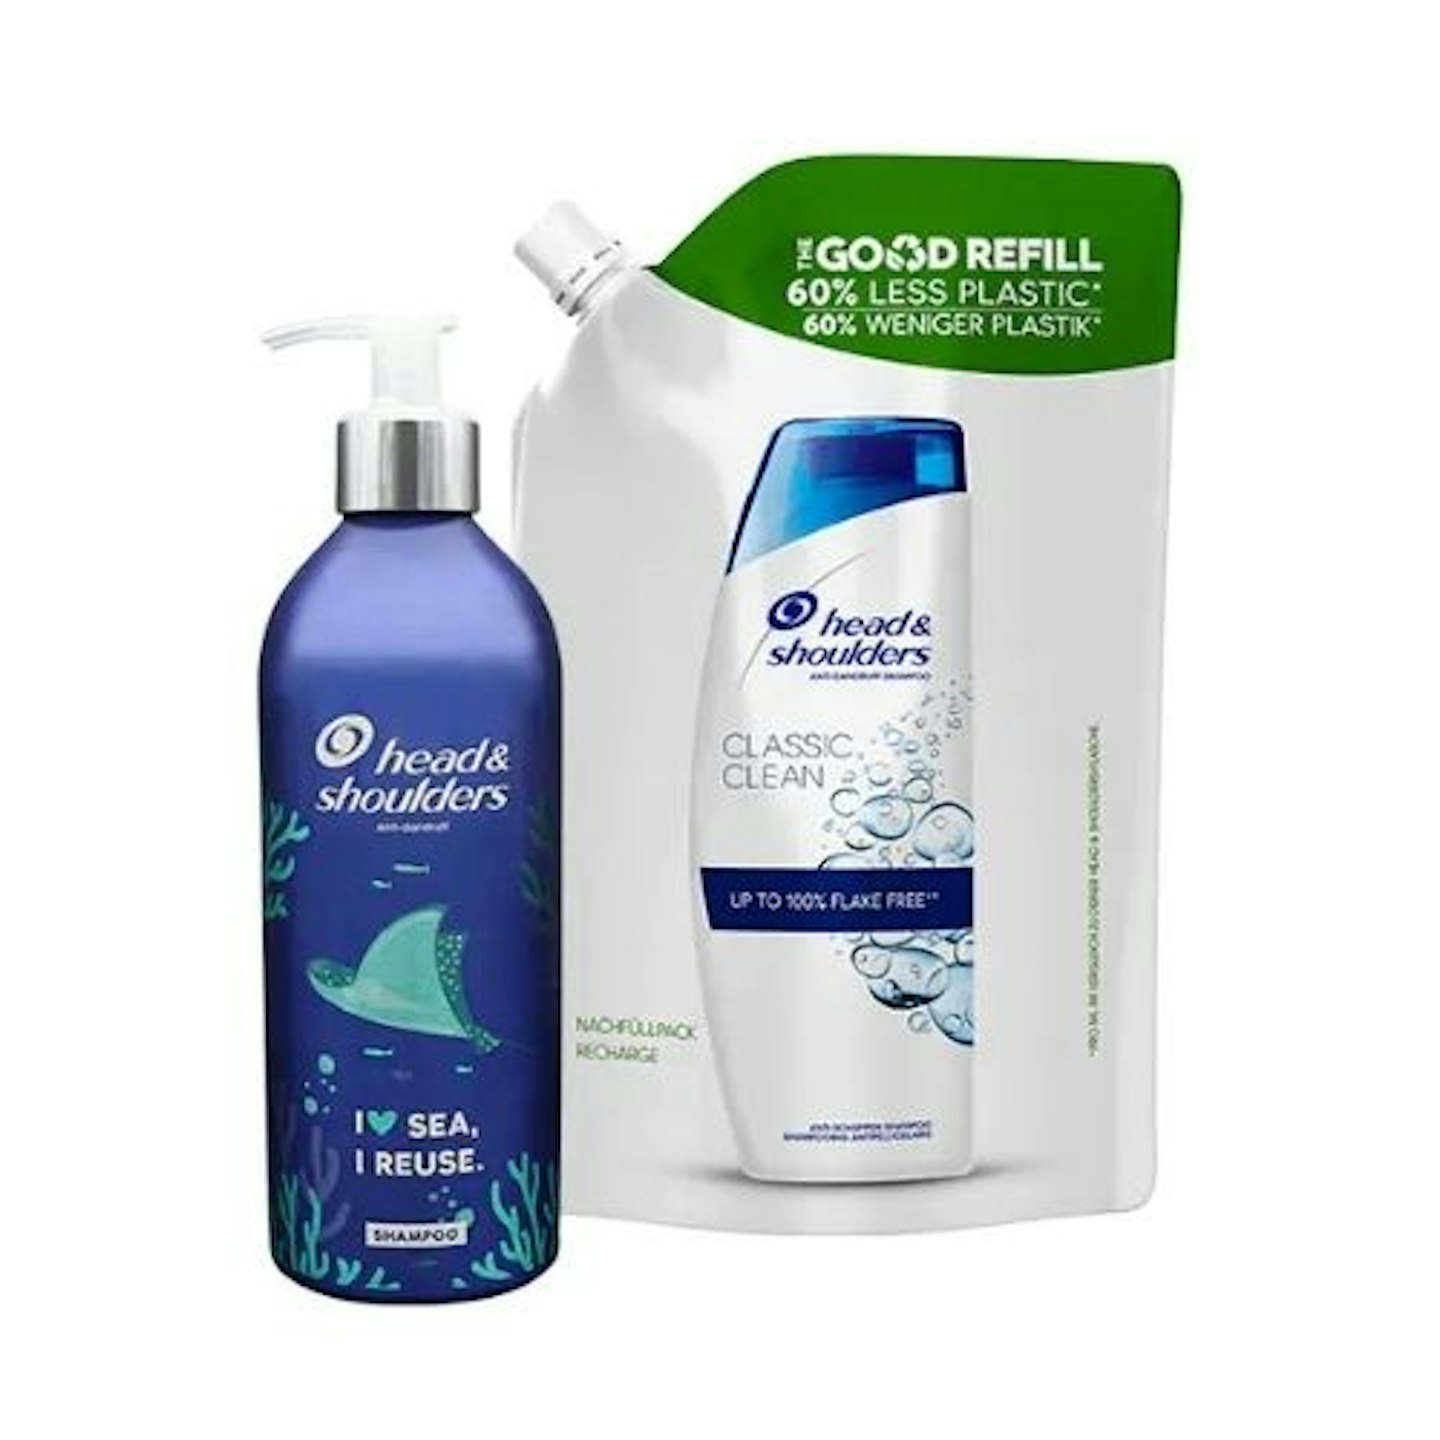 Head & Shoulders Anti Dandruff Shampoo Reusable Bottle & Refill Pouch Bundle